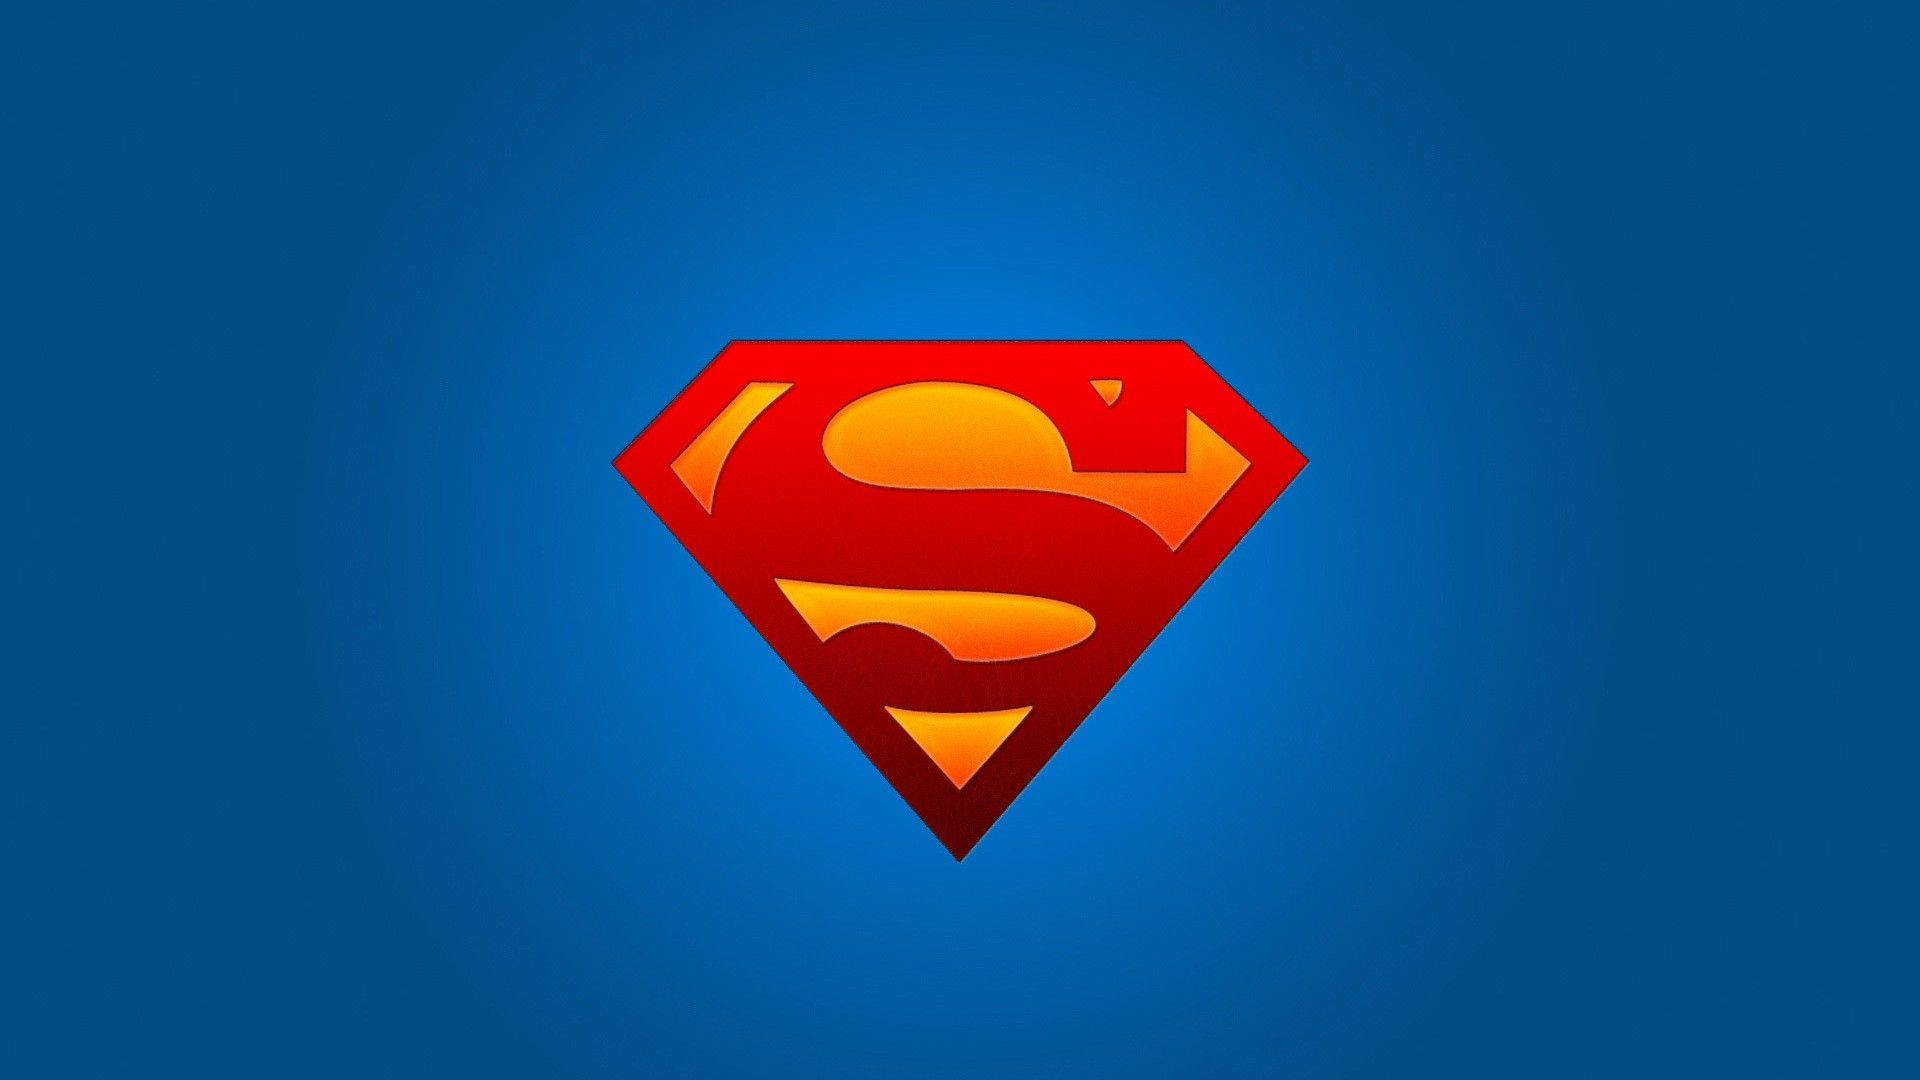 Free download Superhero Logo Super Heroes Symbols Logos HD Vvallpaper Net [1920x1080] for your Desktop, Mobile & Tablet. Explore Superhero Logos Wallpaper. Superman Logo Wallpaper, Superman Batman Logo